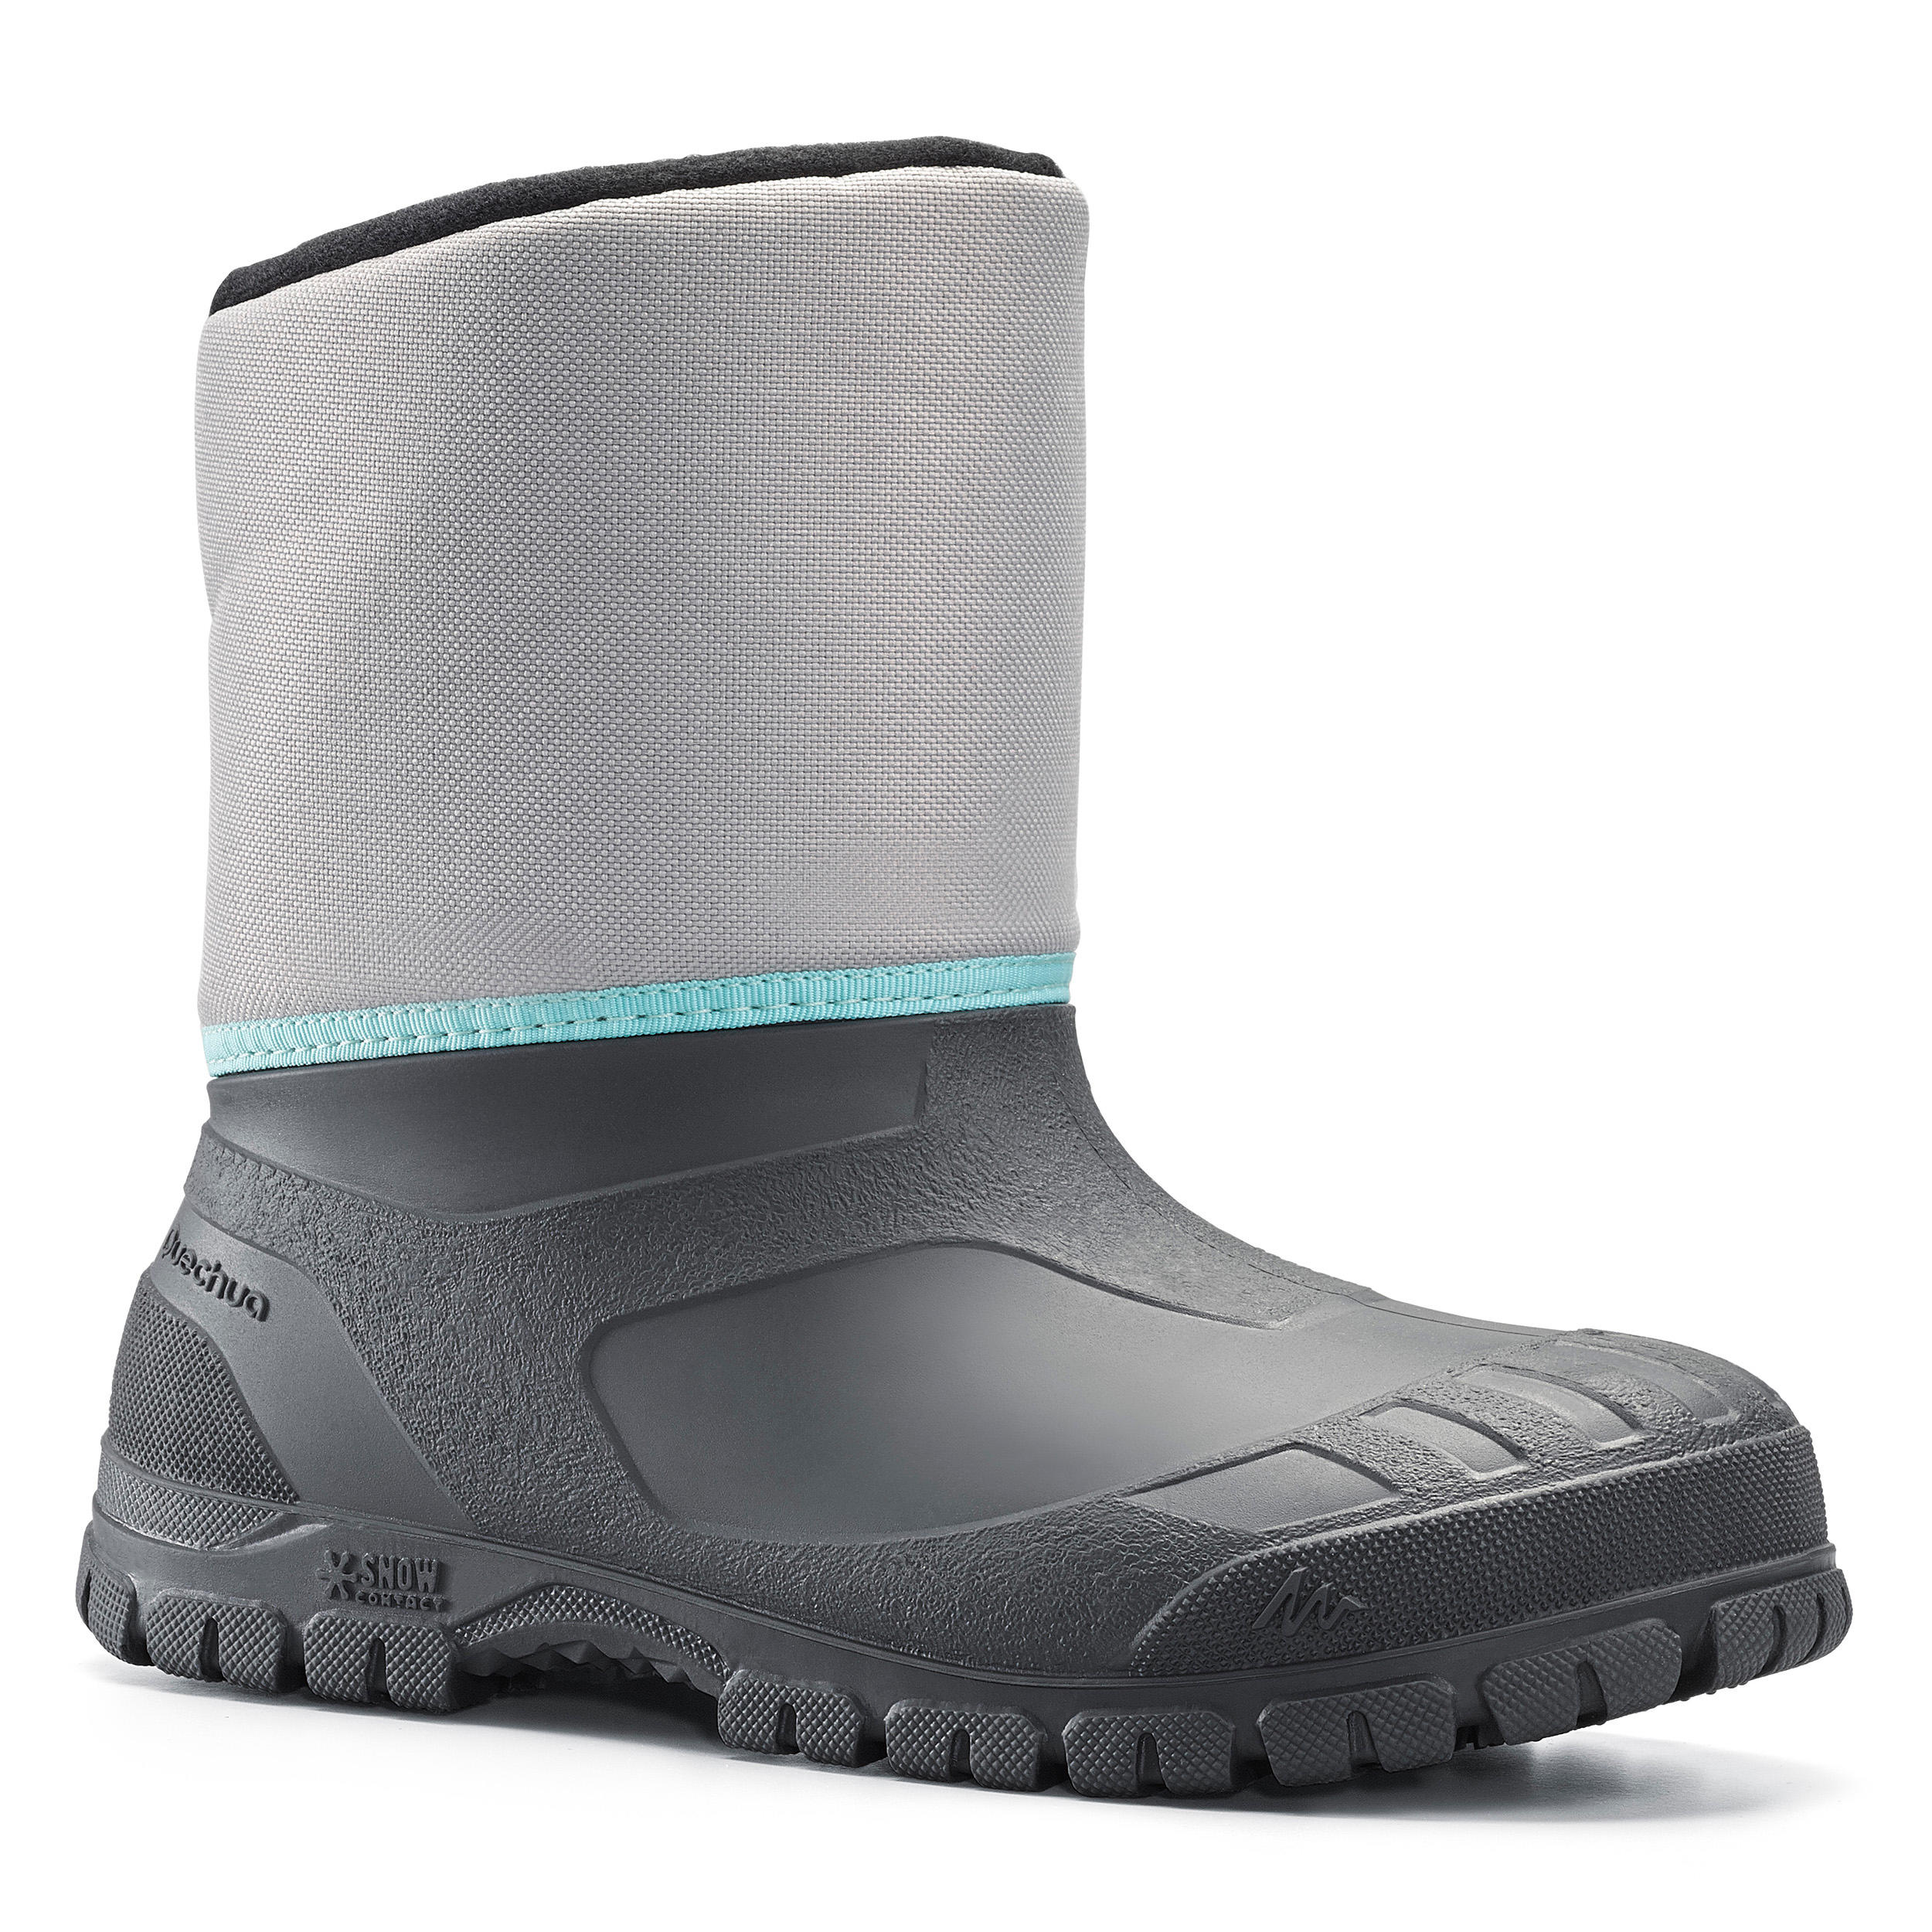 QUECHUA Kids’ Warm Waterproof Snow Hiking Boots SH100 Warm Size 8 - 4.5